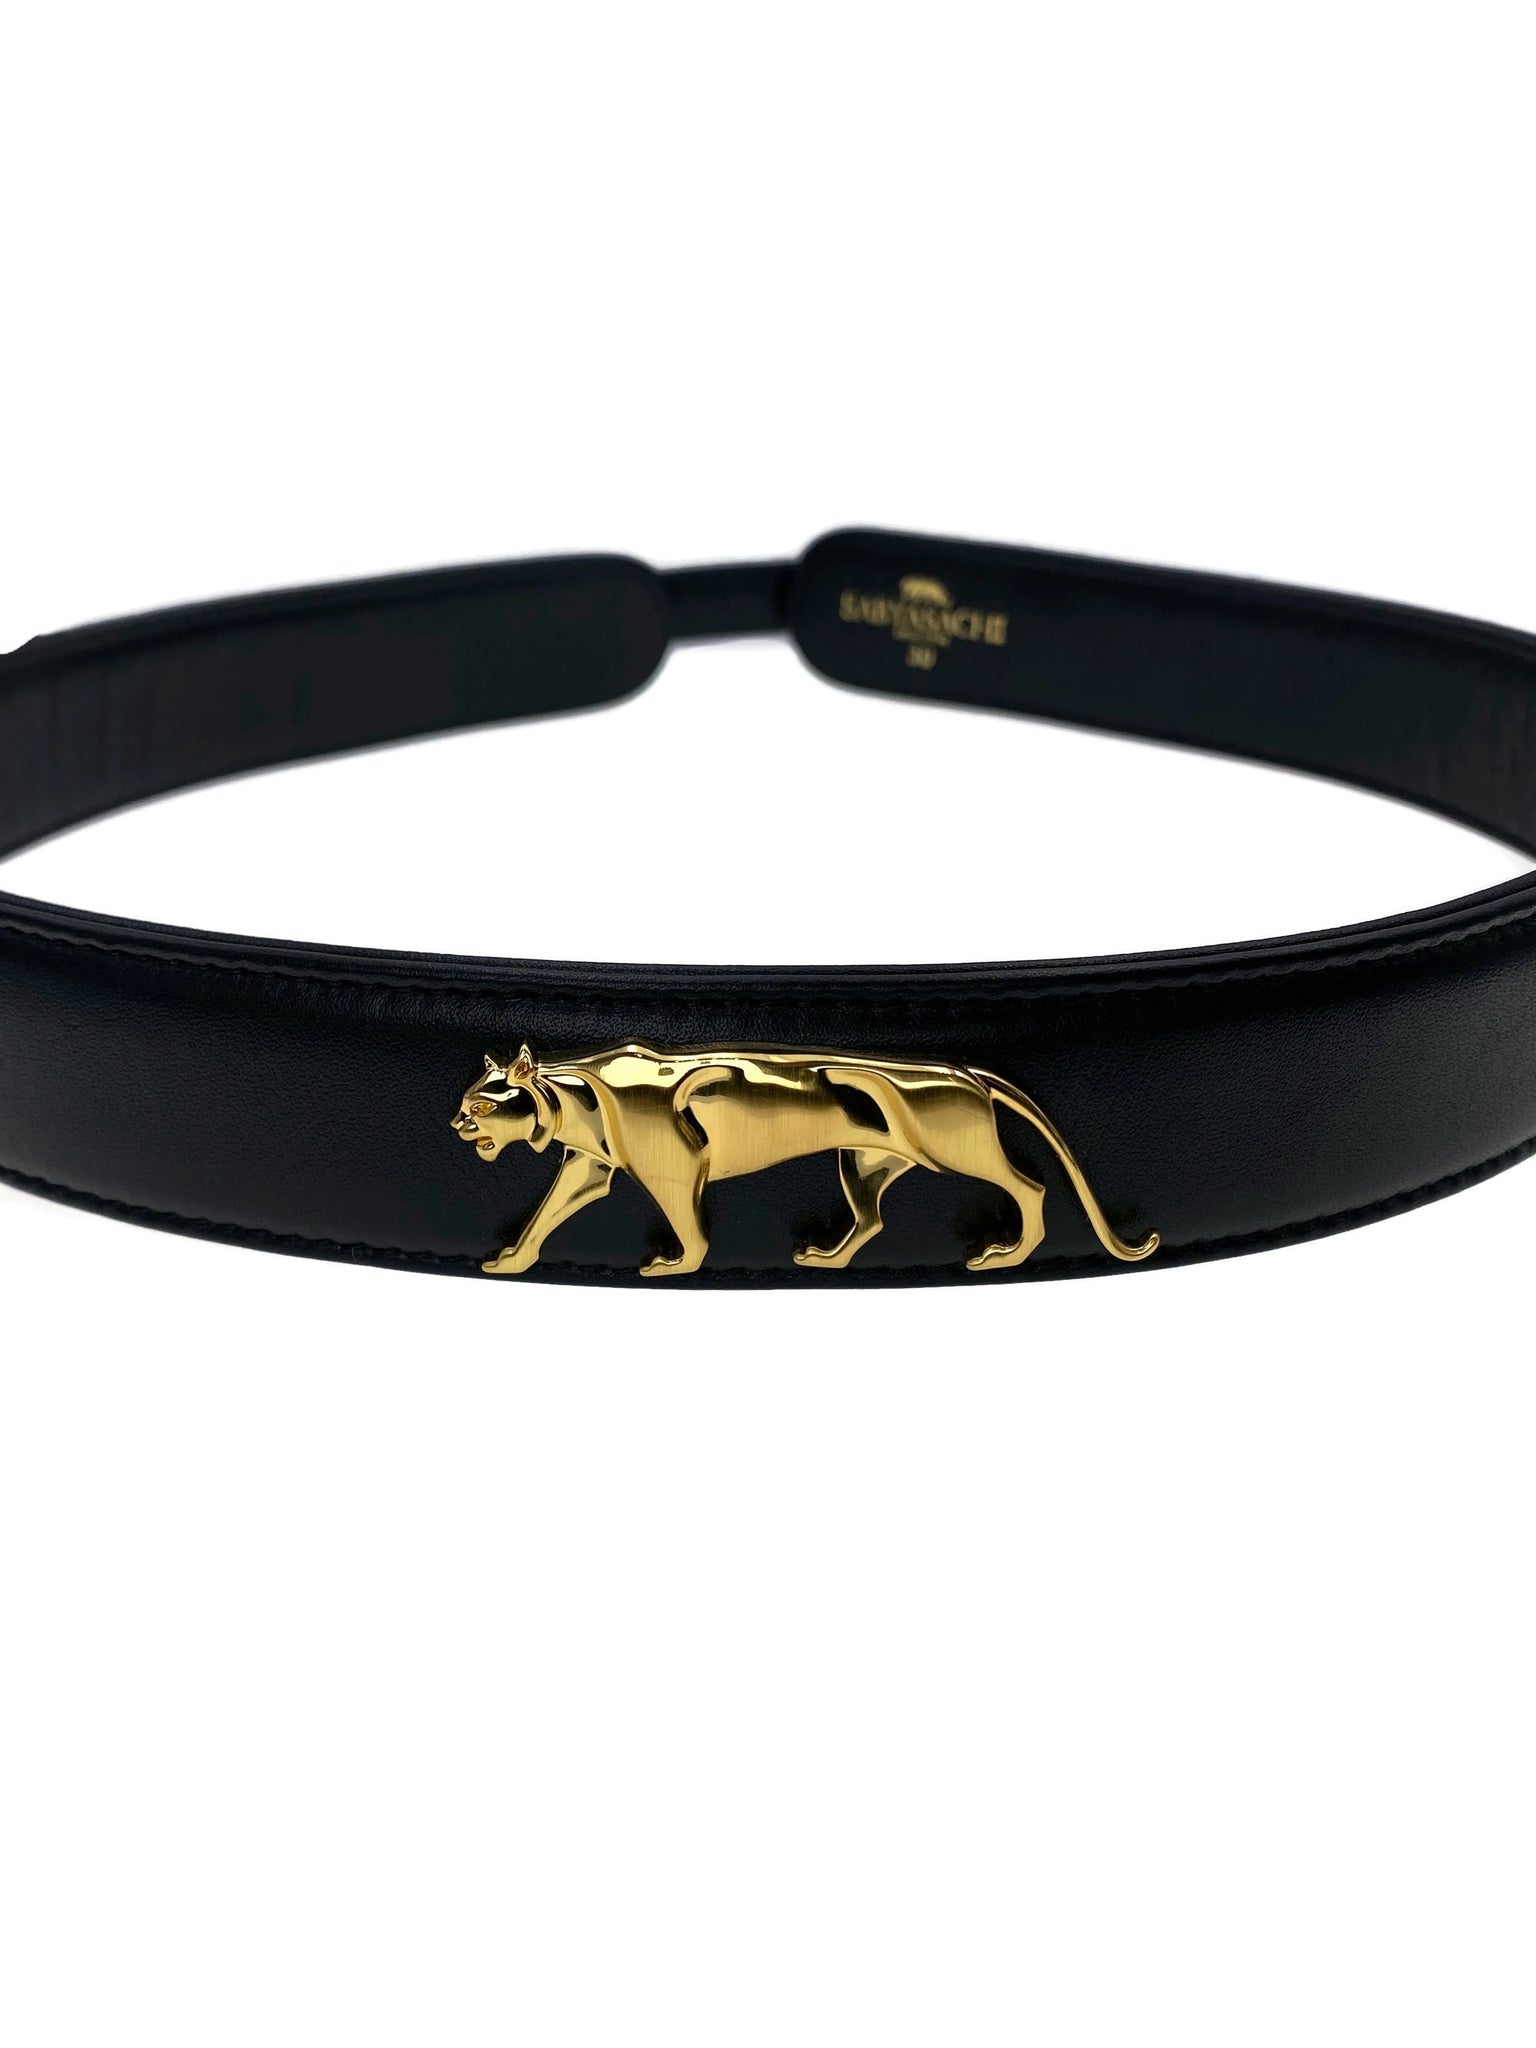 Royal Bengal Tiger Black Sabyasachi Leather Belt close up view